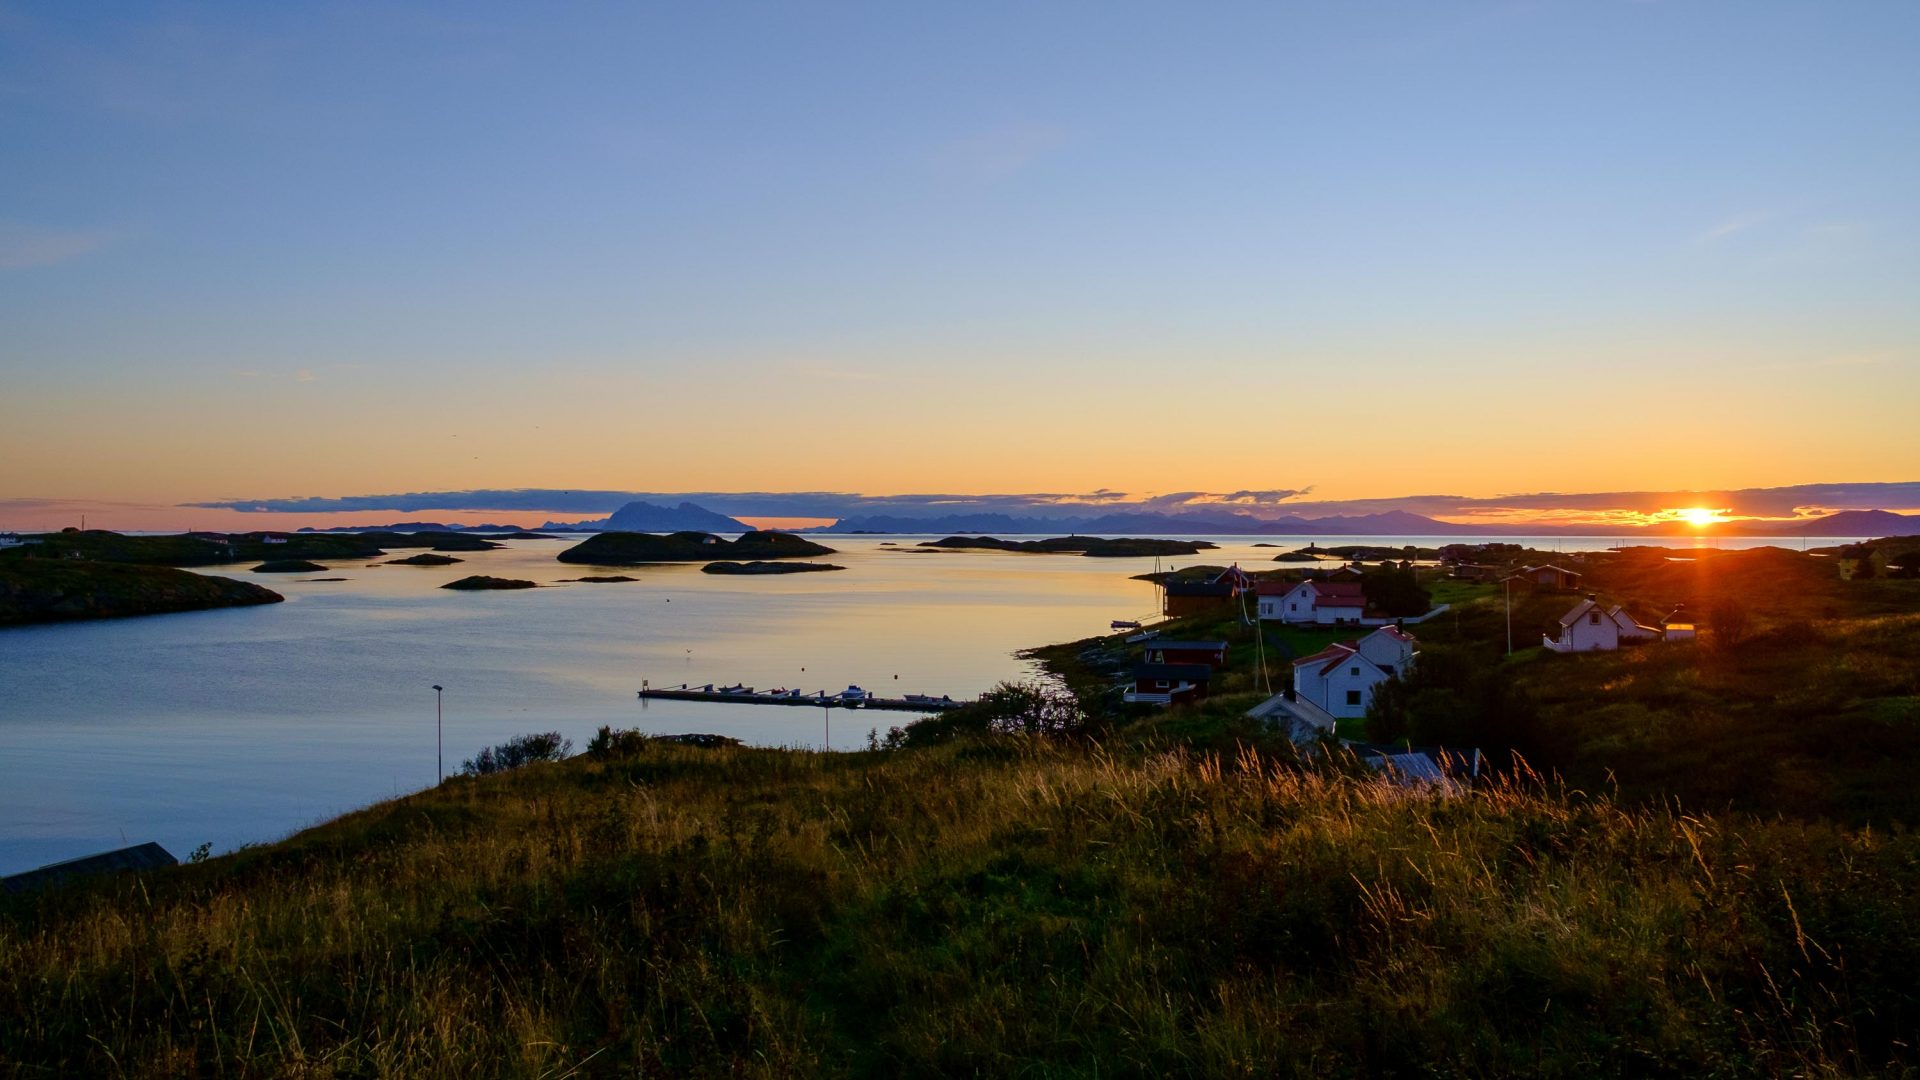 A golden sunrise over the Fleinvaer archipelago, Norway.